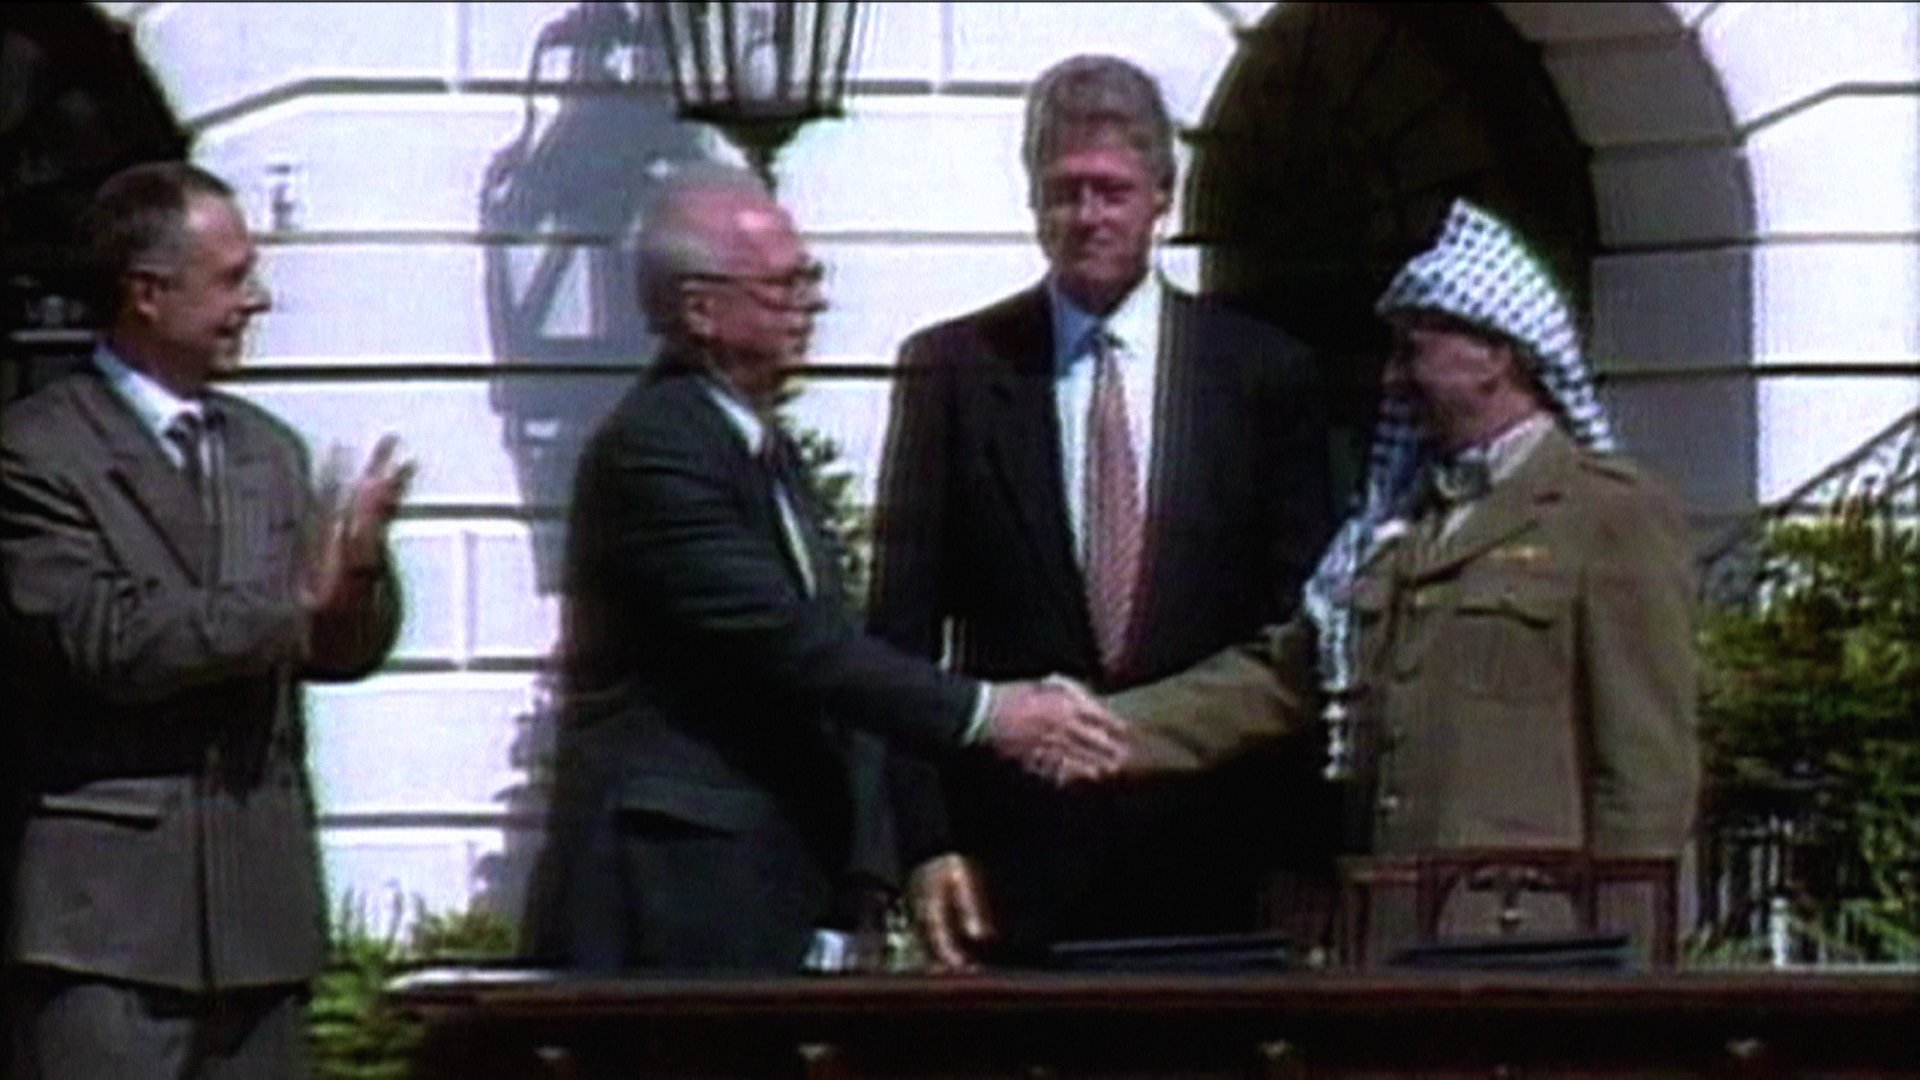 20 Handshakes for Peace [segment] A film by Mahdi Fleifel, 3 min